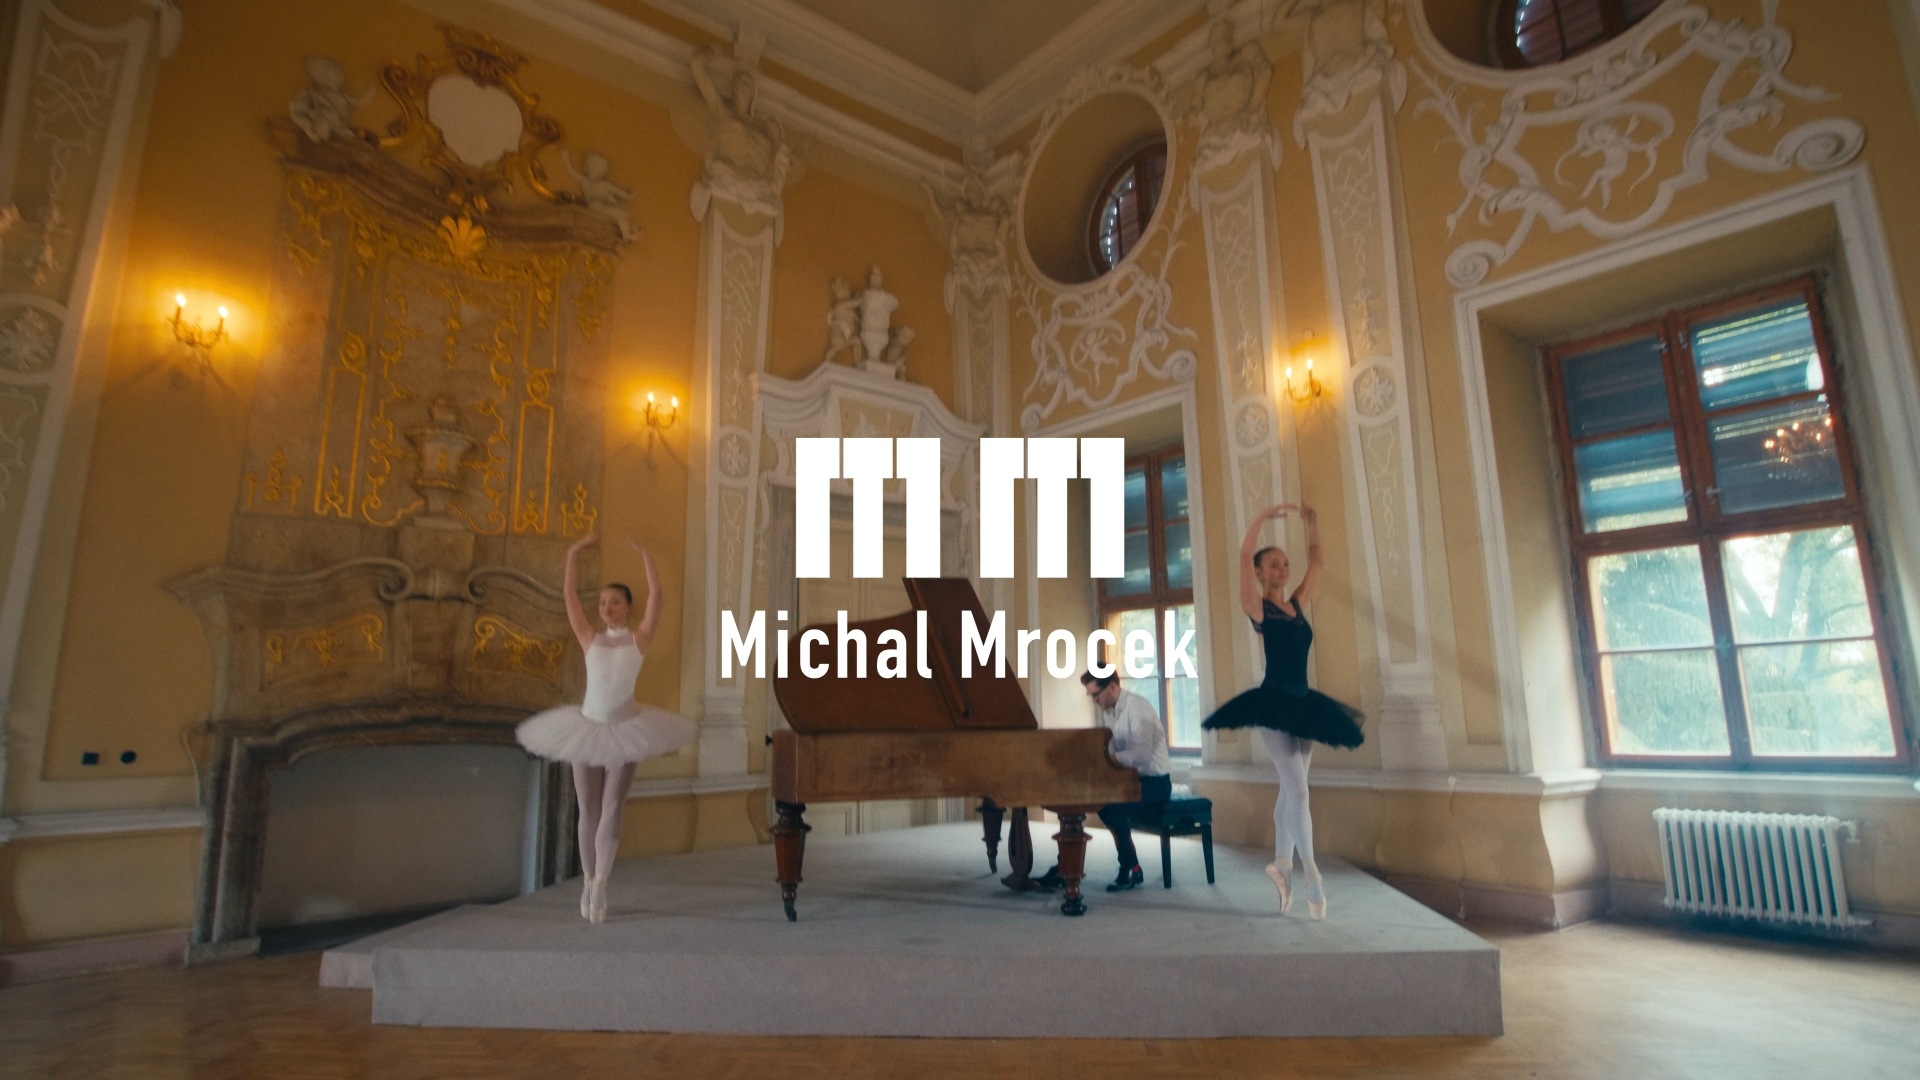 Michal Mrocek Piano